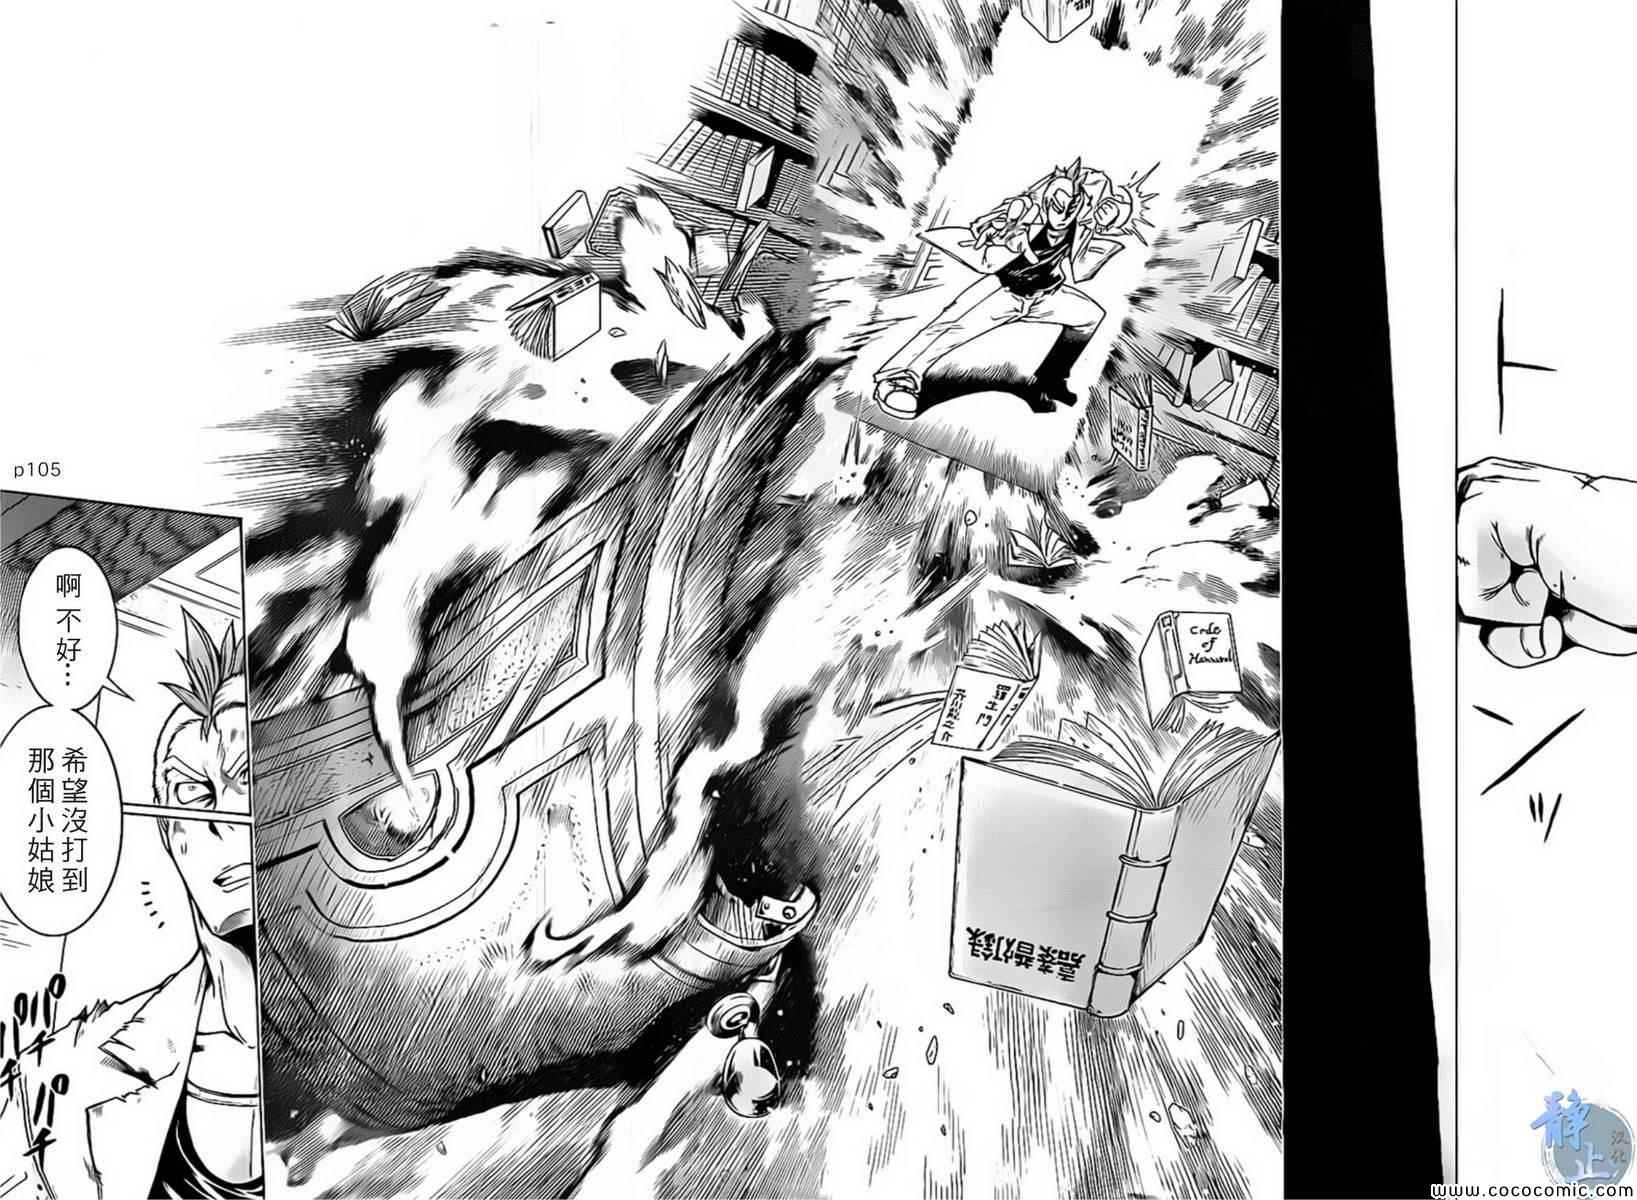 《MURCIELAGO-蝙蝠》漫画 MURCIELAGO 006集